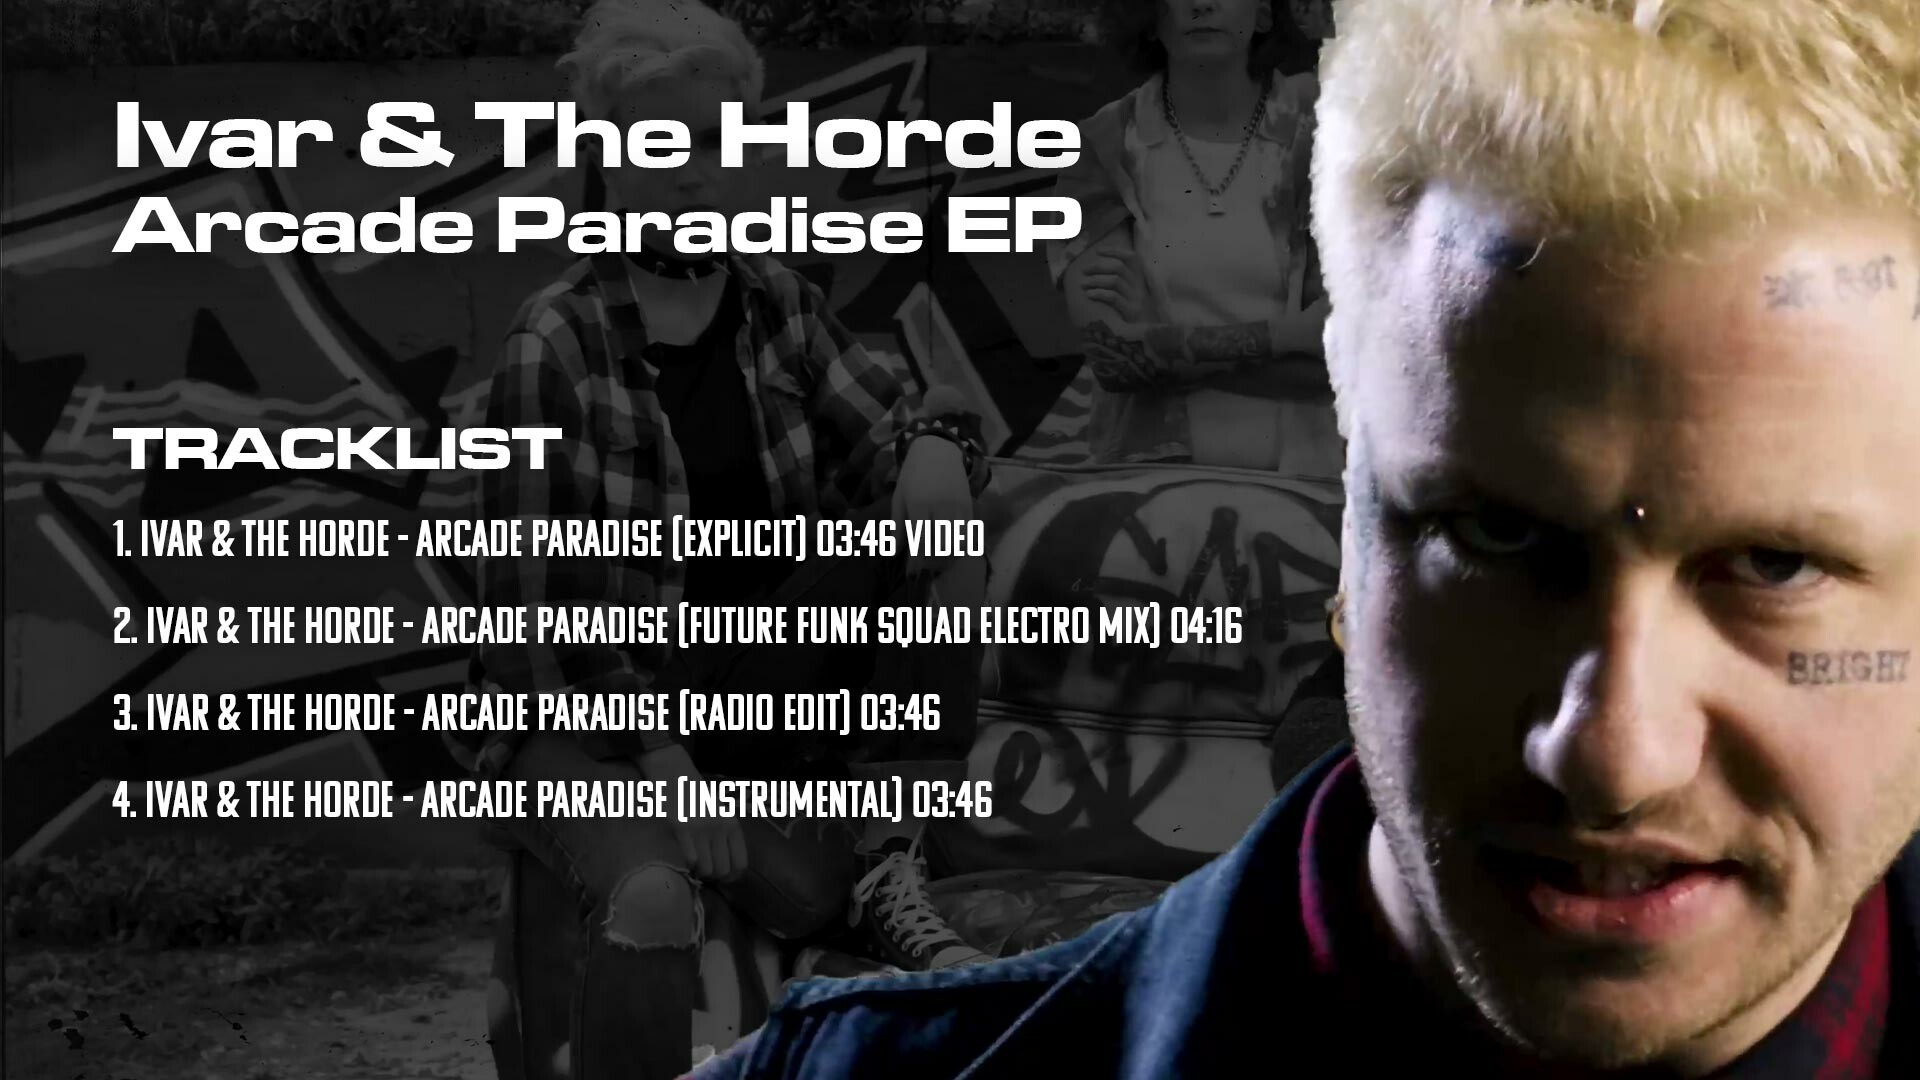 Arcade Paradise - Arcade Paradise EP DLC Steam CD Key 0.5 $